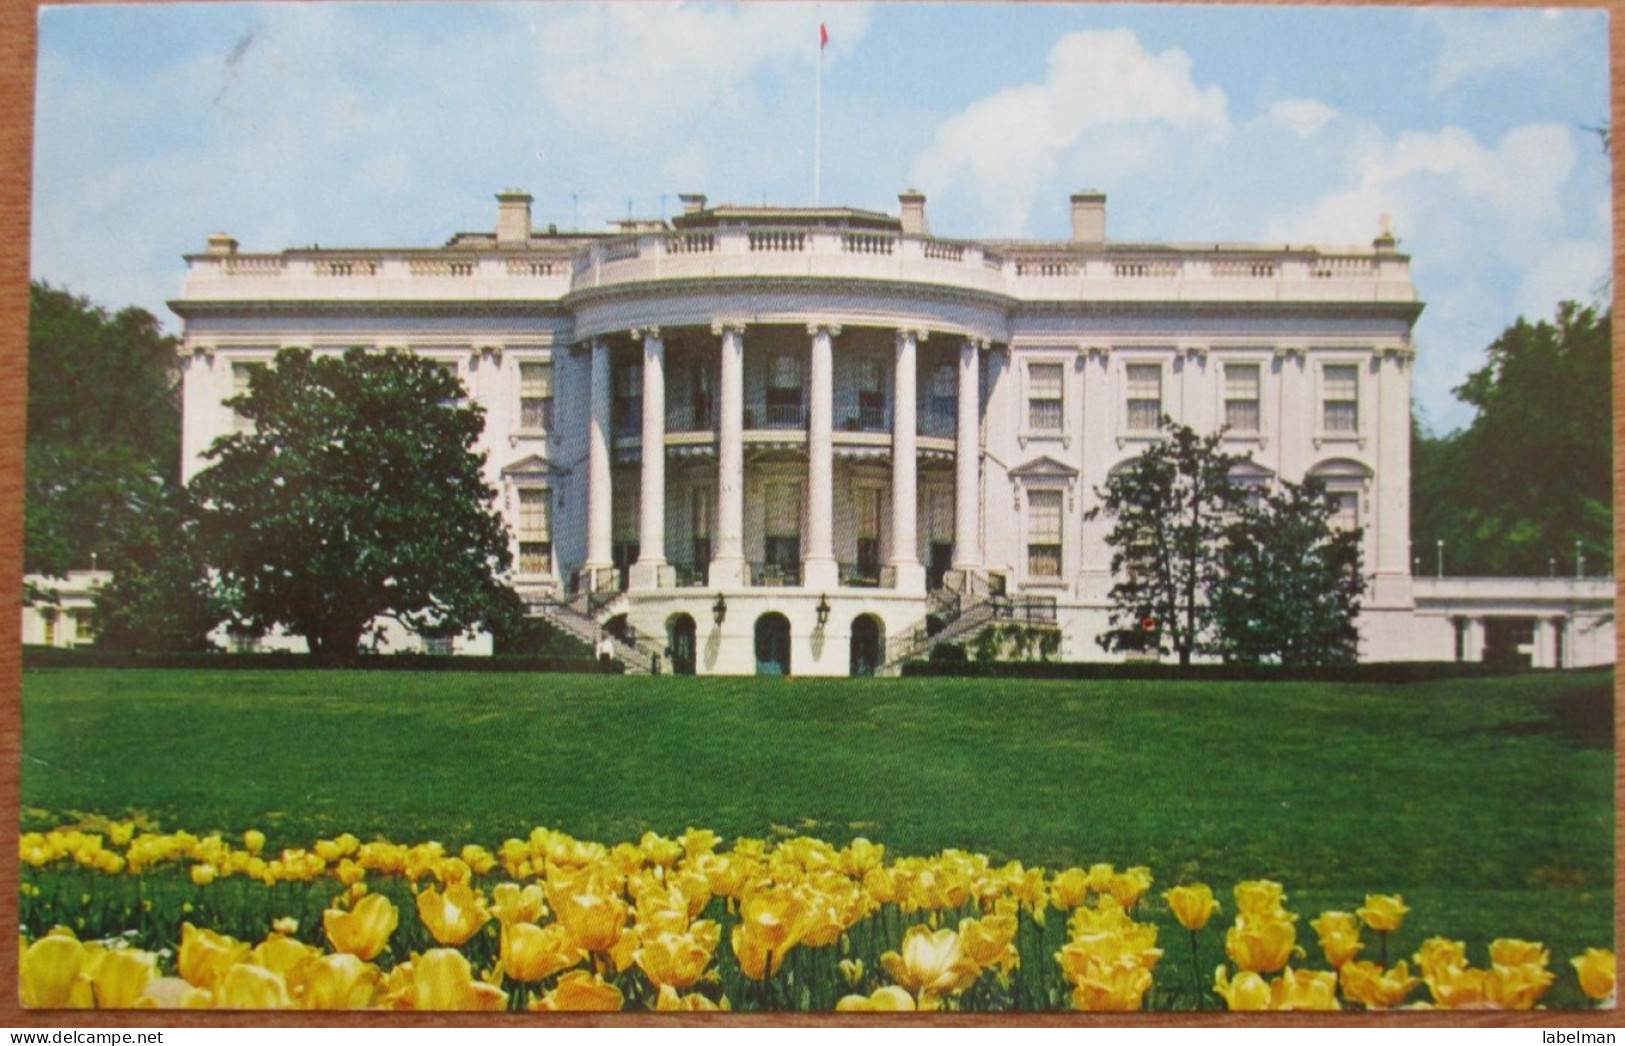 WHITE HOUSE WASHINGTON GARDEN INN USA UNITED STATES CPA CPM PC CARD POST ANSICHTSKARTE CARTOLINA POSTCARD - Spokane